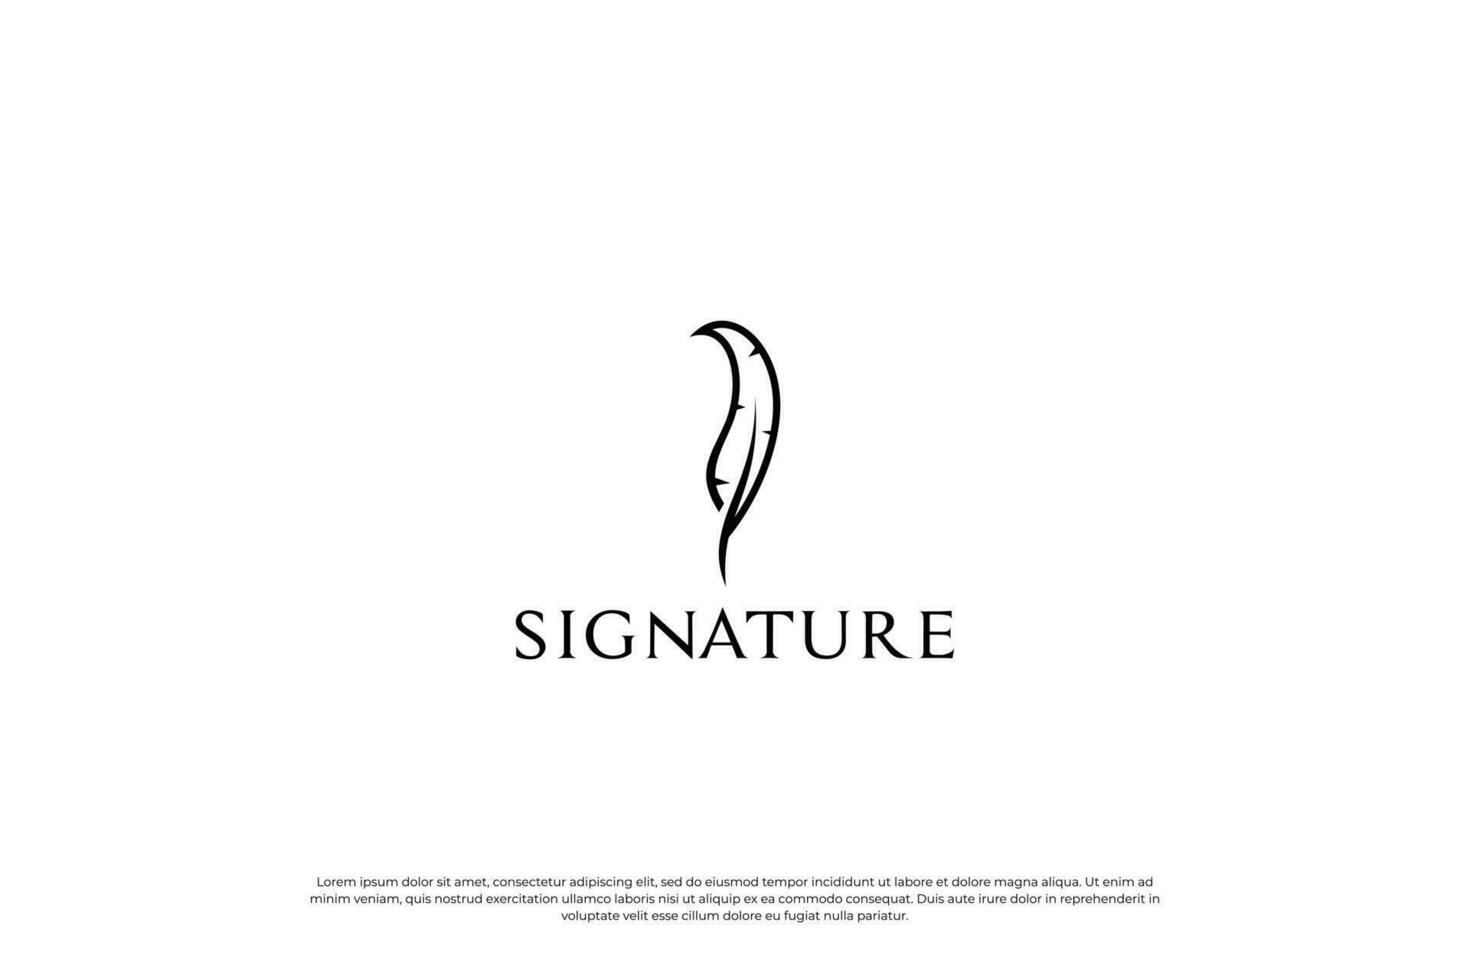 fjäder penna gåspenna signatur logotyp design. vektor